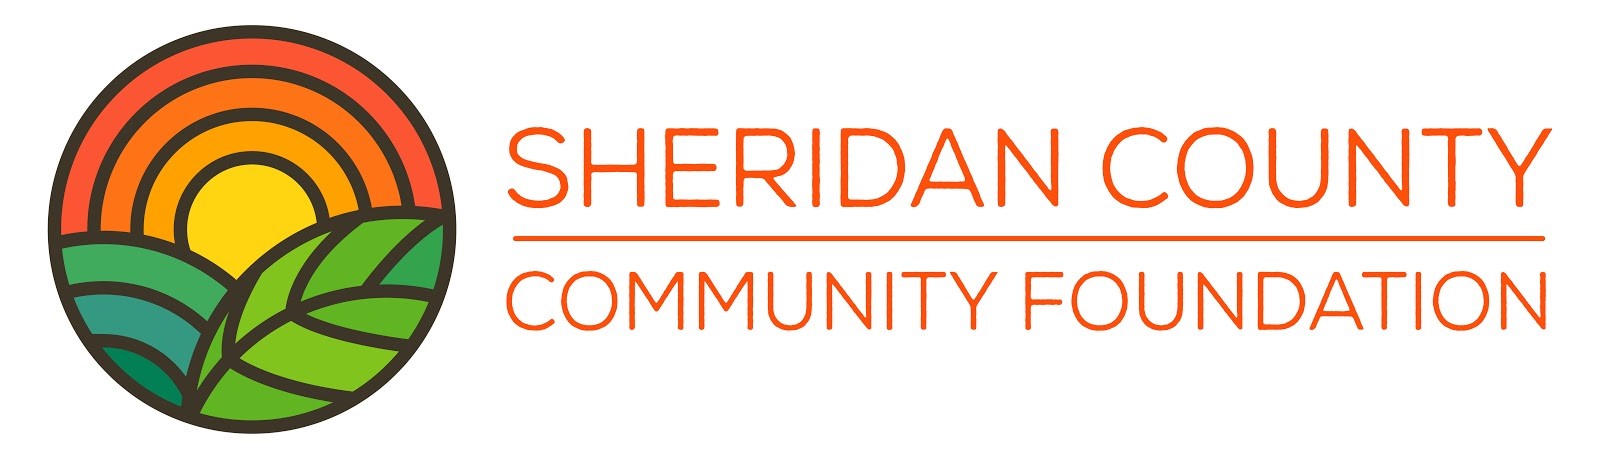 Sheridan County Community Foundation & Economic Development Corporation's Logo